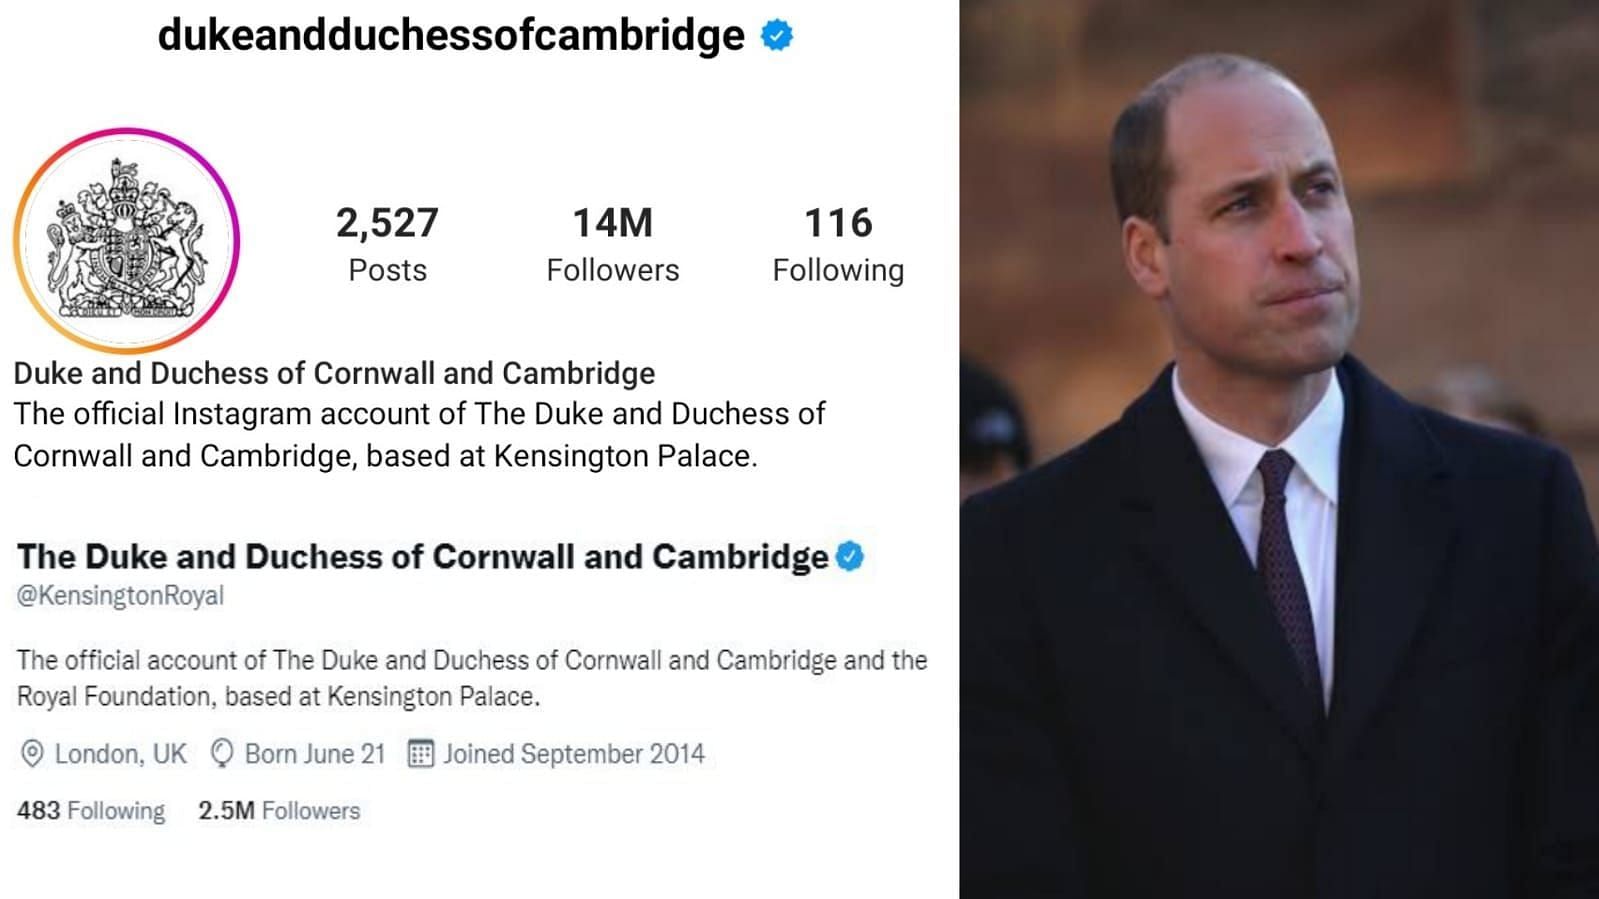  William and Kate change social media bio (via dukeandduchessofcambridge/Instagram and Twitter)